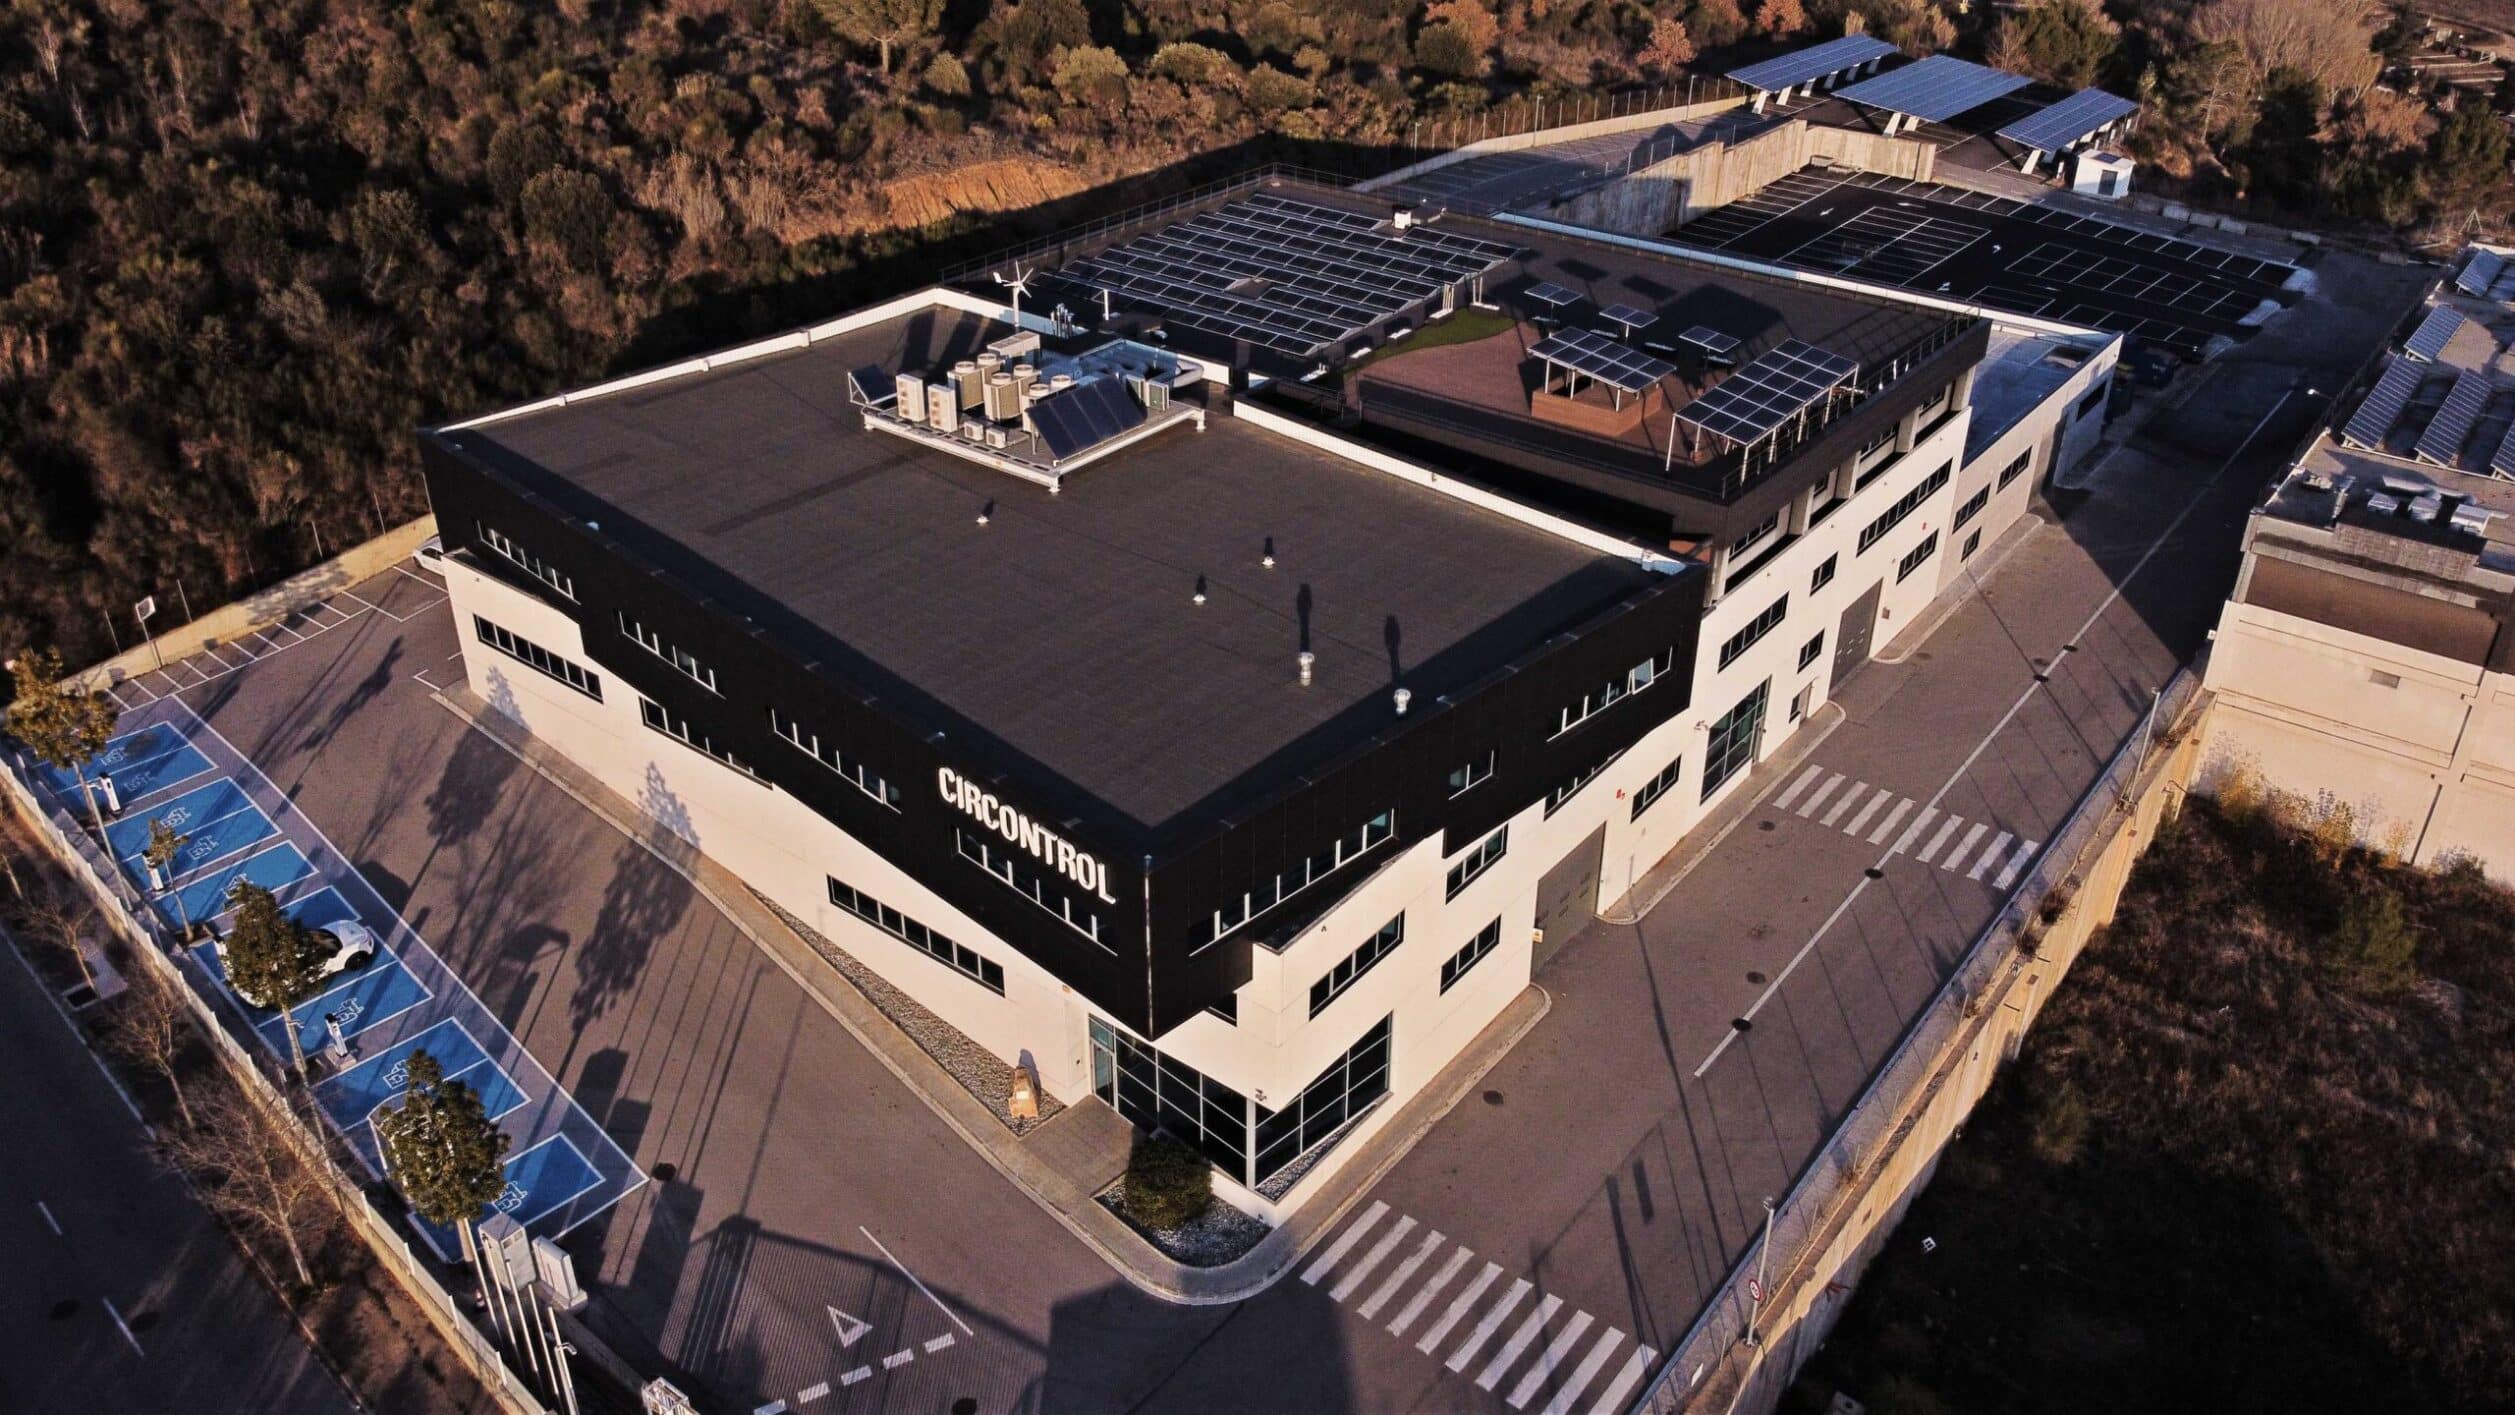 Circontrol's facilities, seen at aerial view